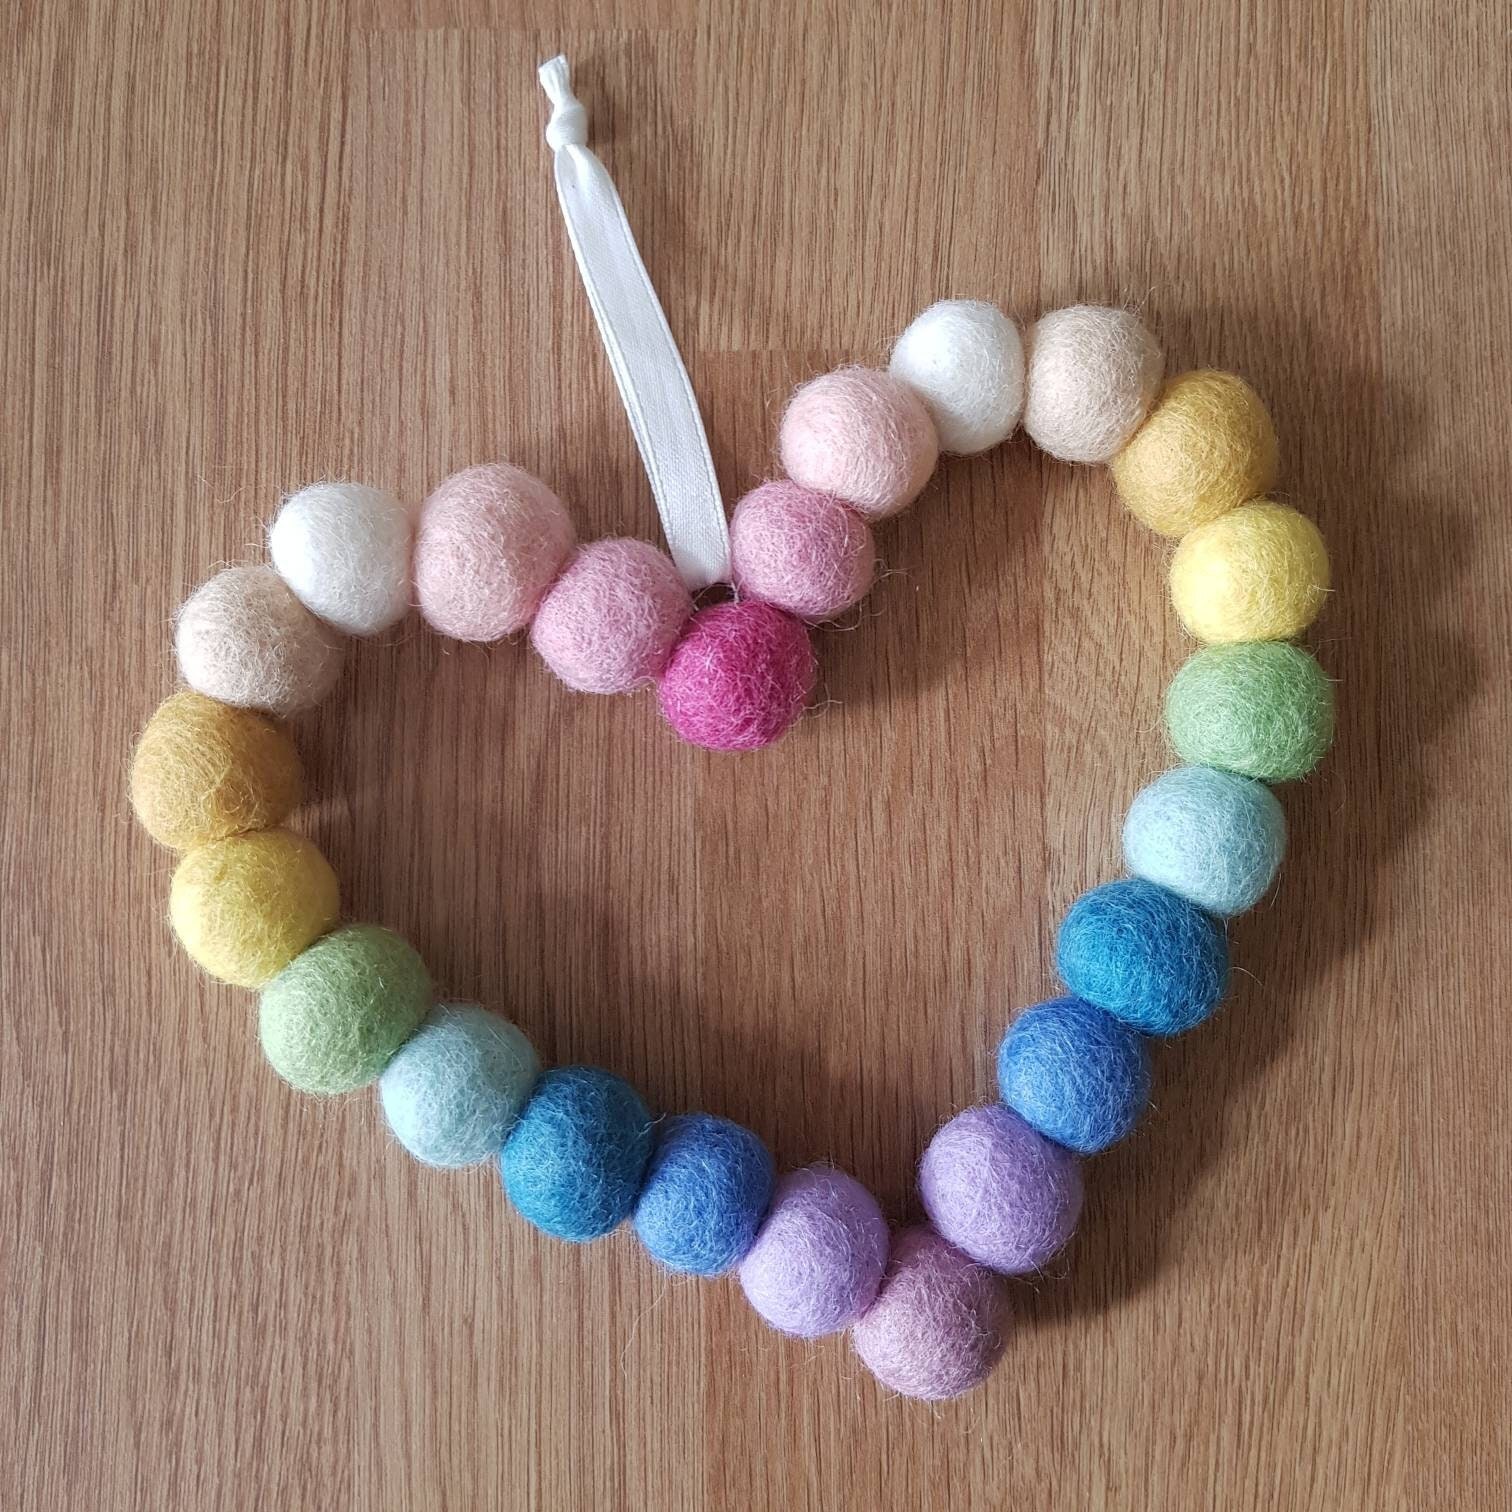 Multicolored Yarn Heart Garland - A Wonderful Thought